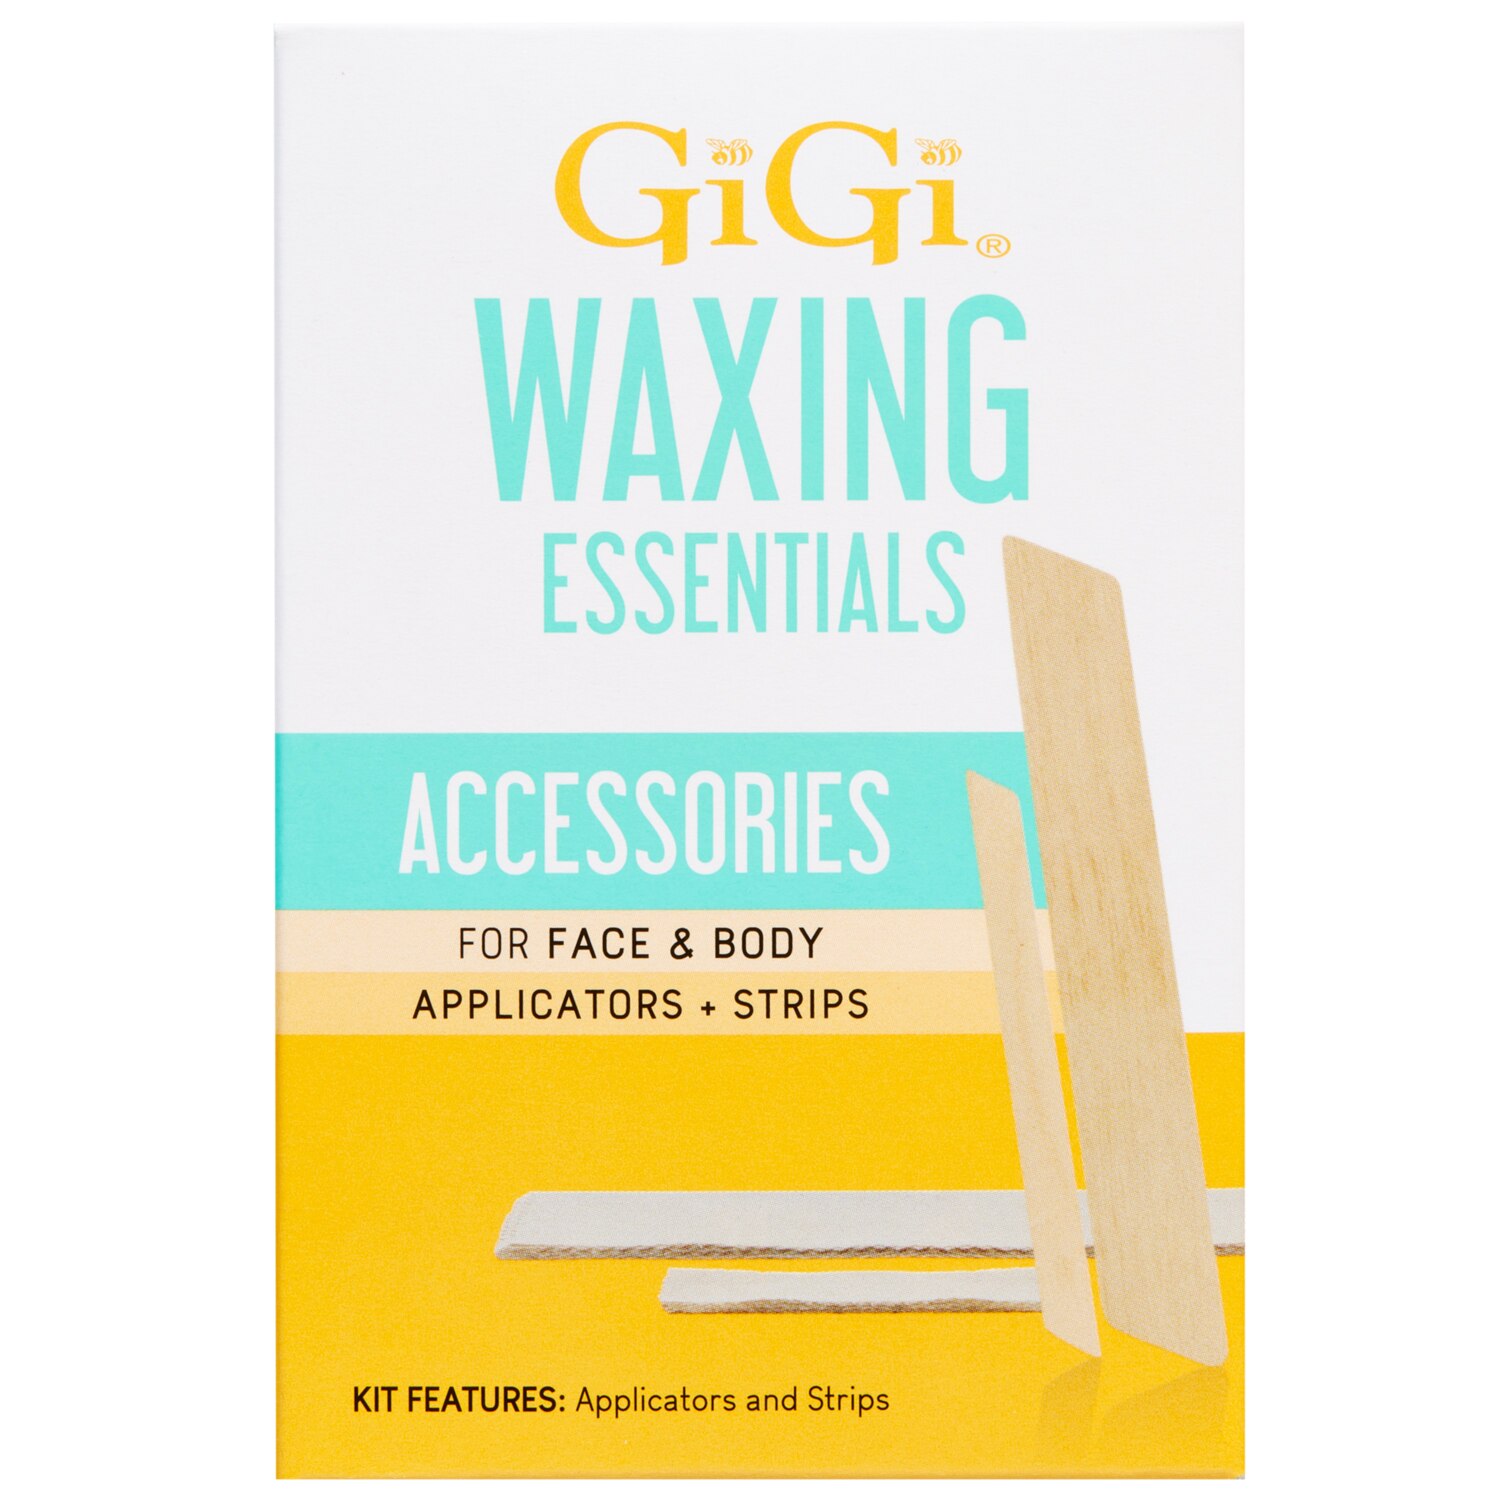 GiGi Waxing Essentials, Accessories